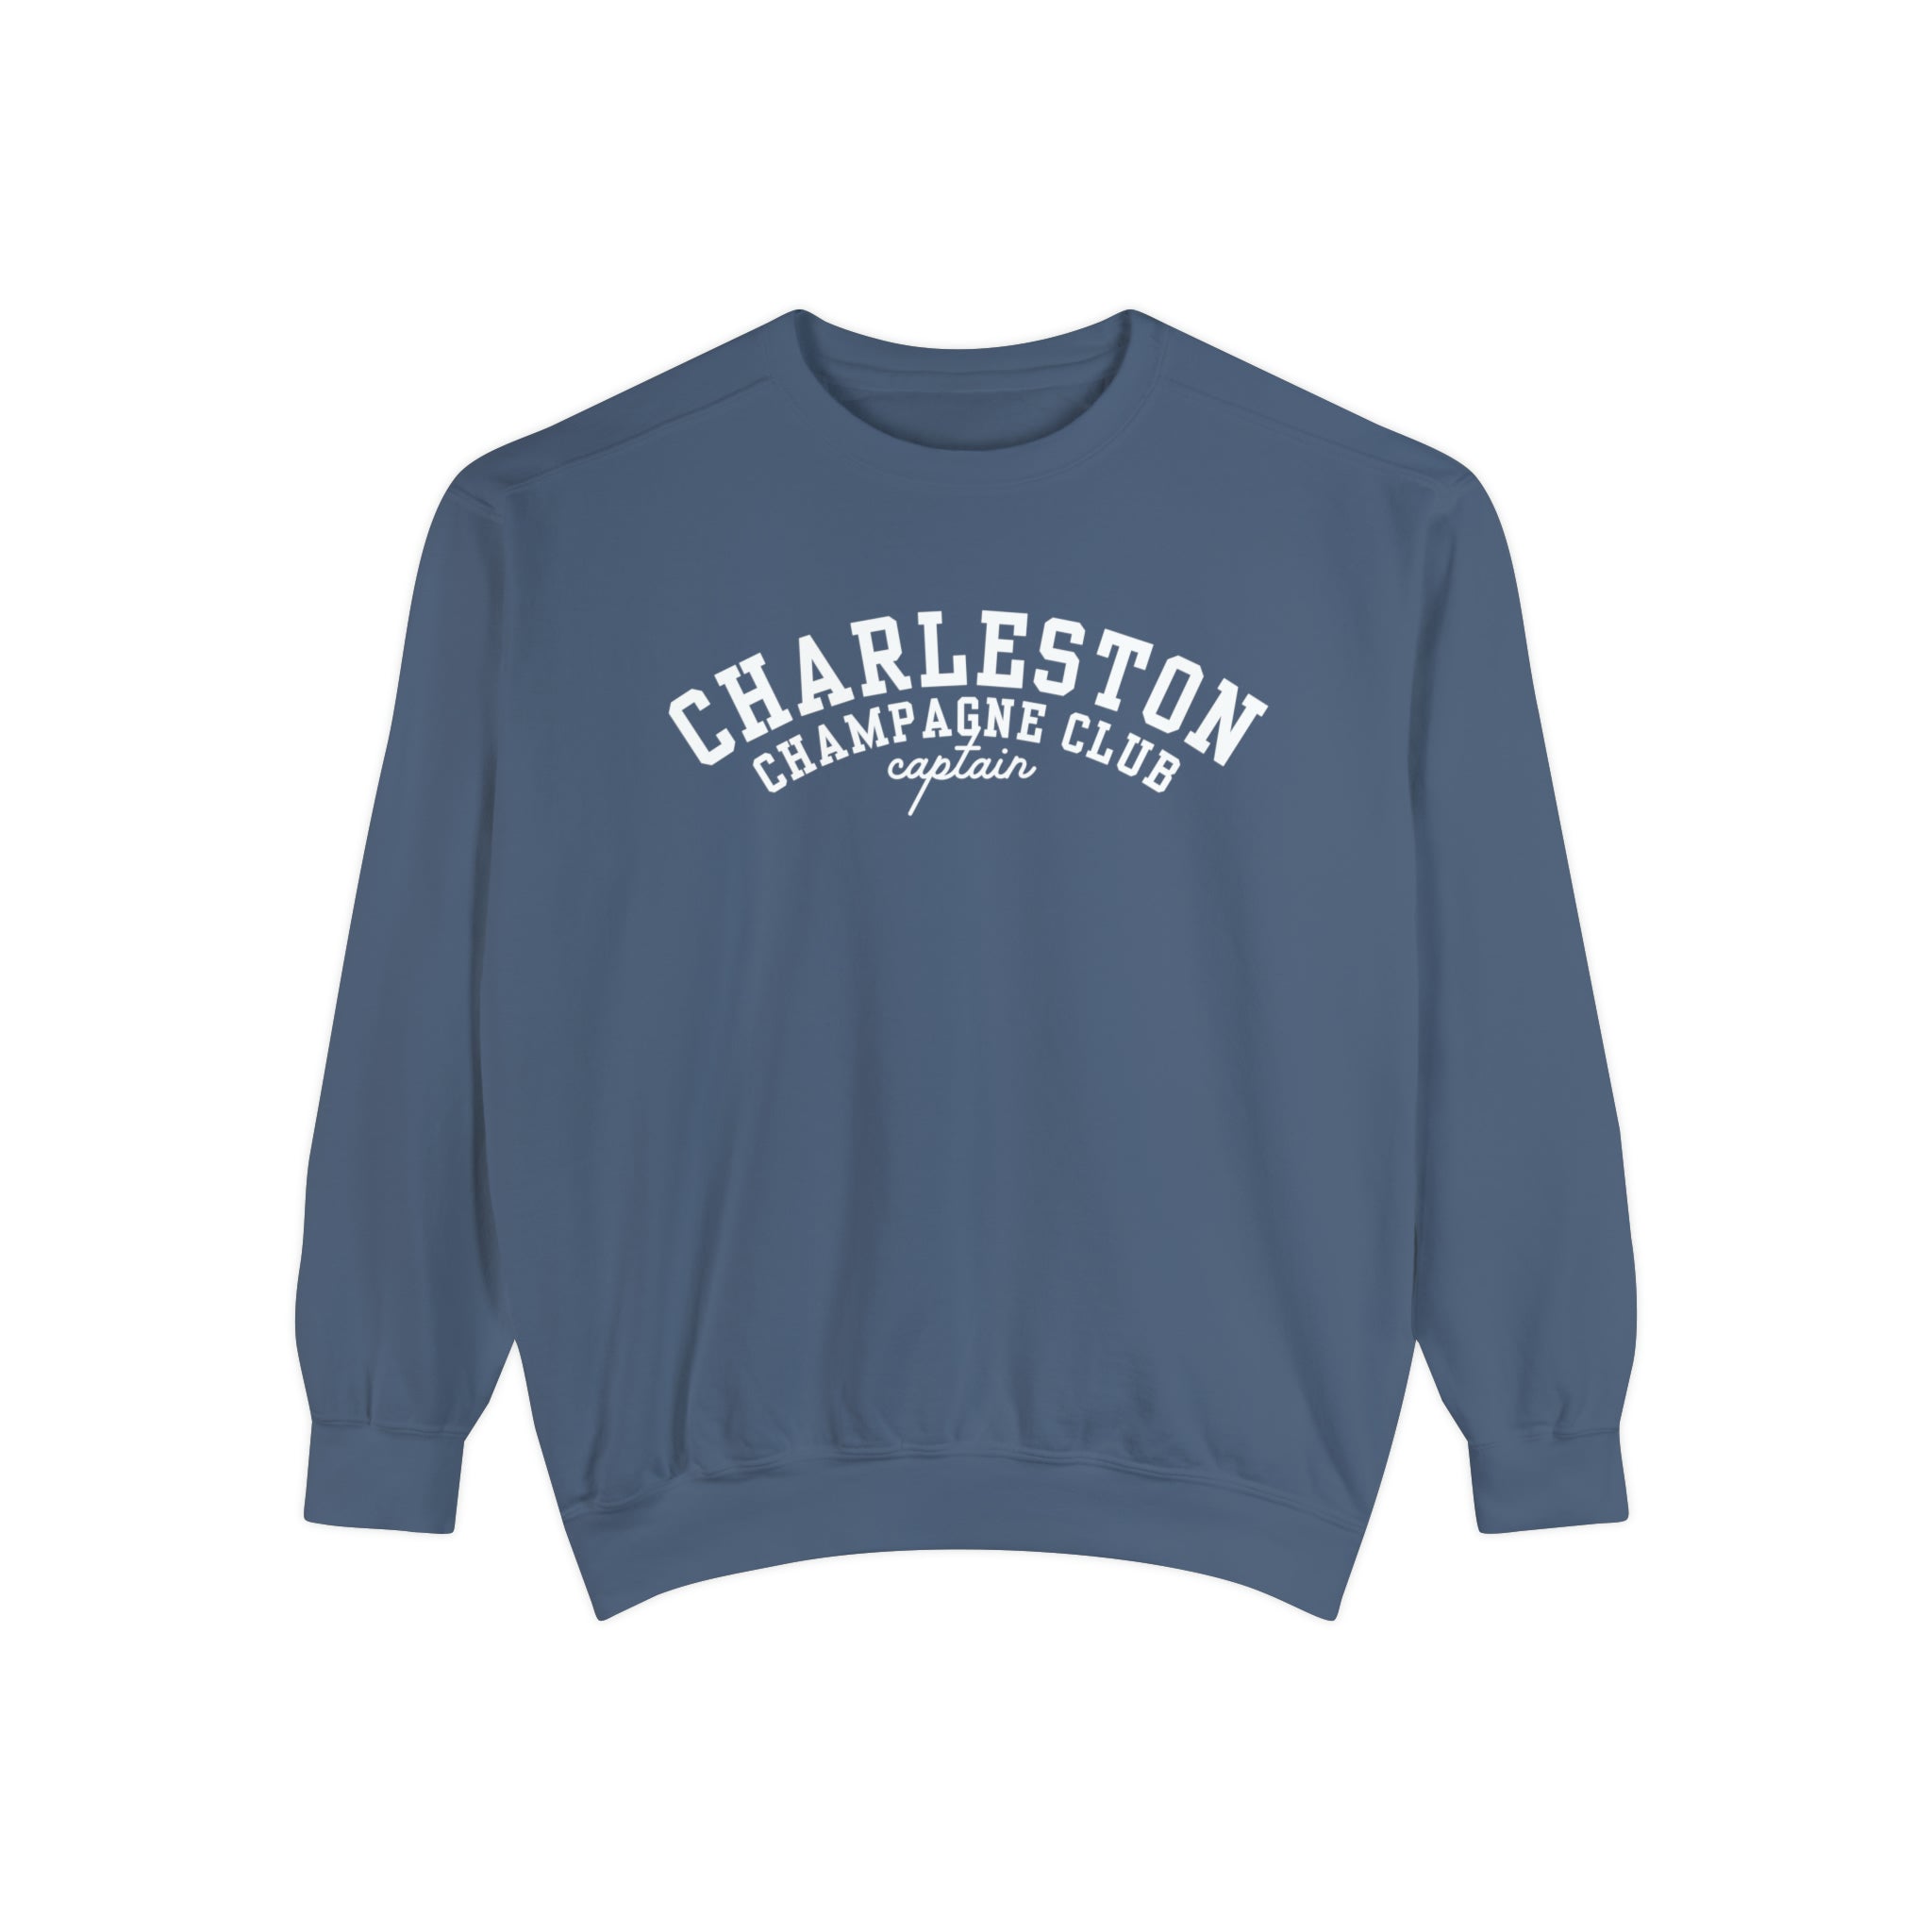 Charleston Champagne Club Comfort Colors Crewneck Sweatshirt